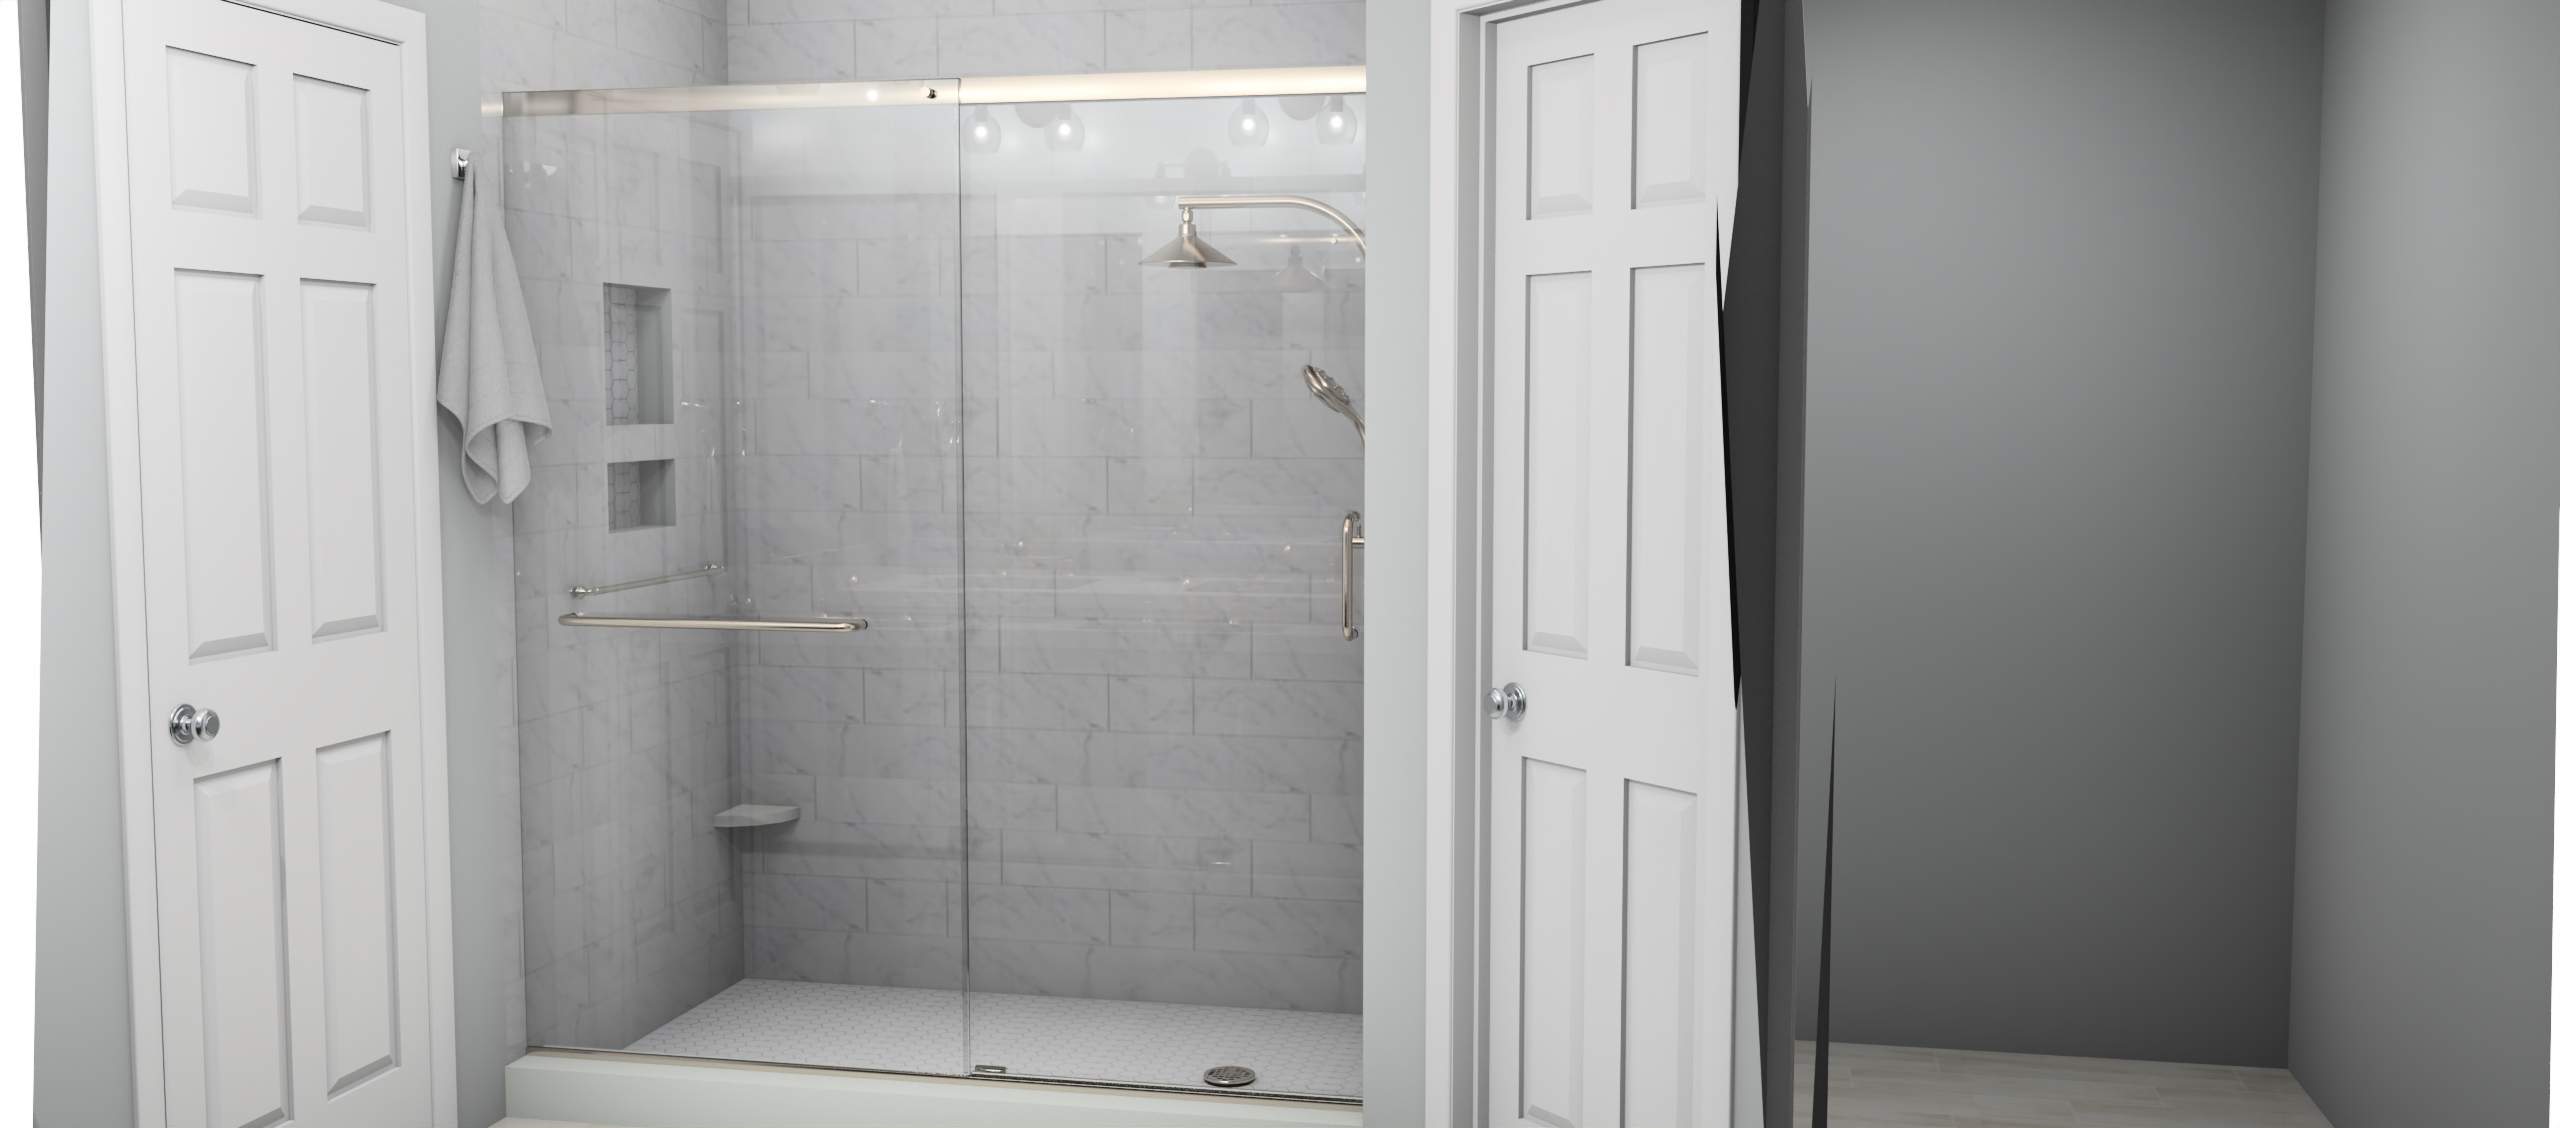 bathroom remodel dave kolenc 3 - Keselman Construction Group Inc